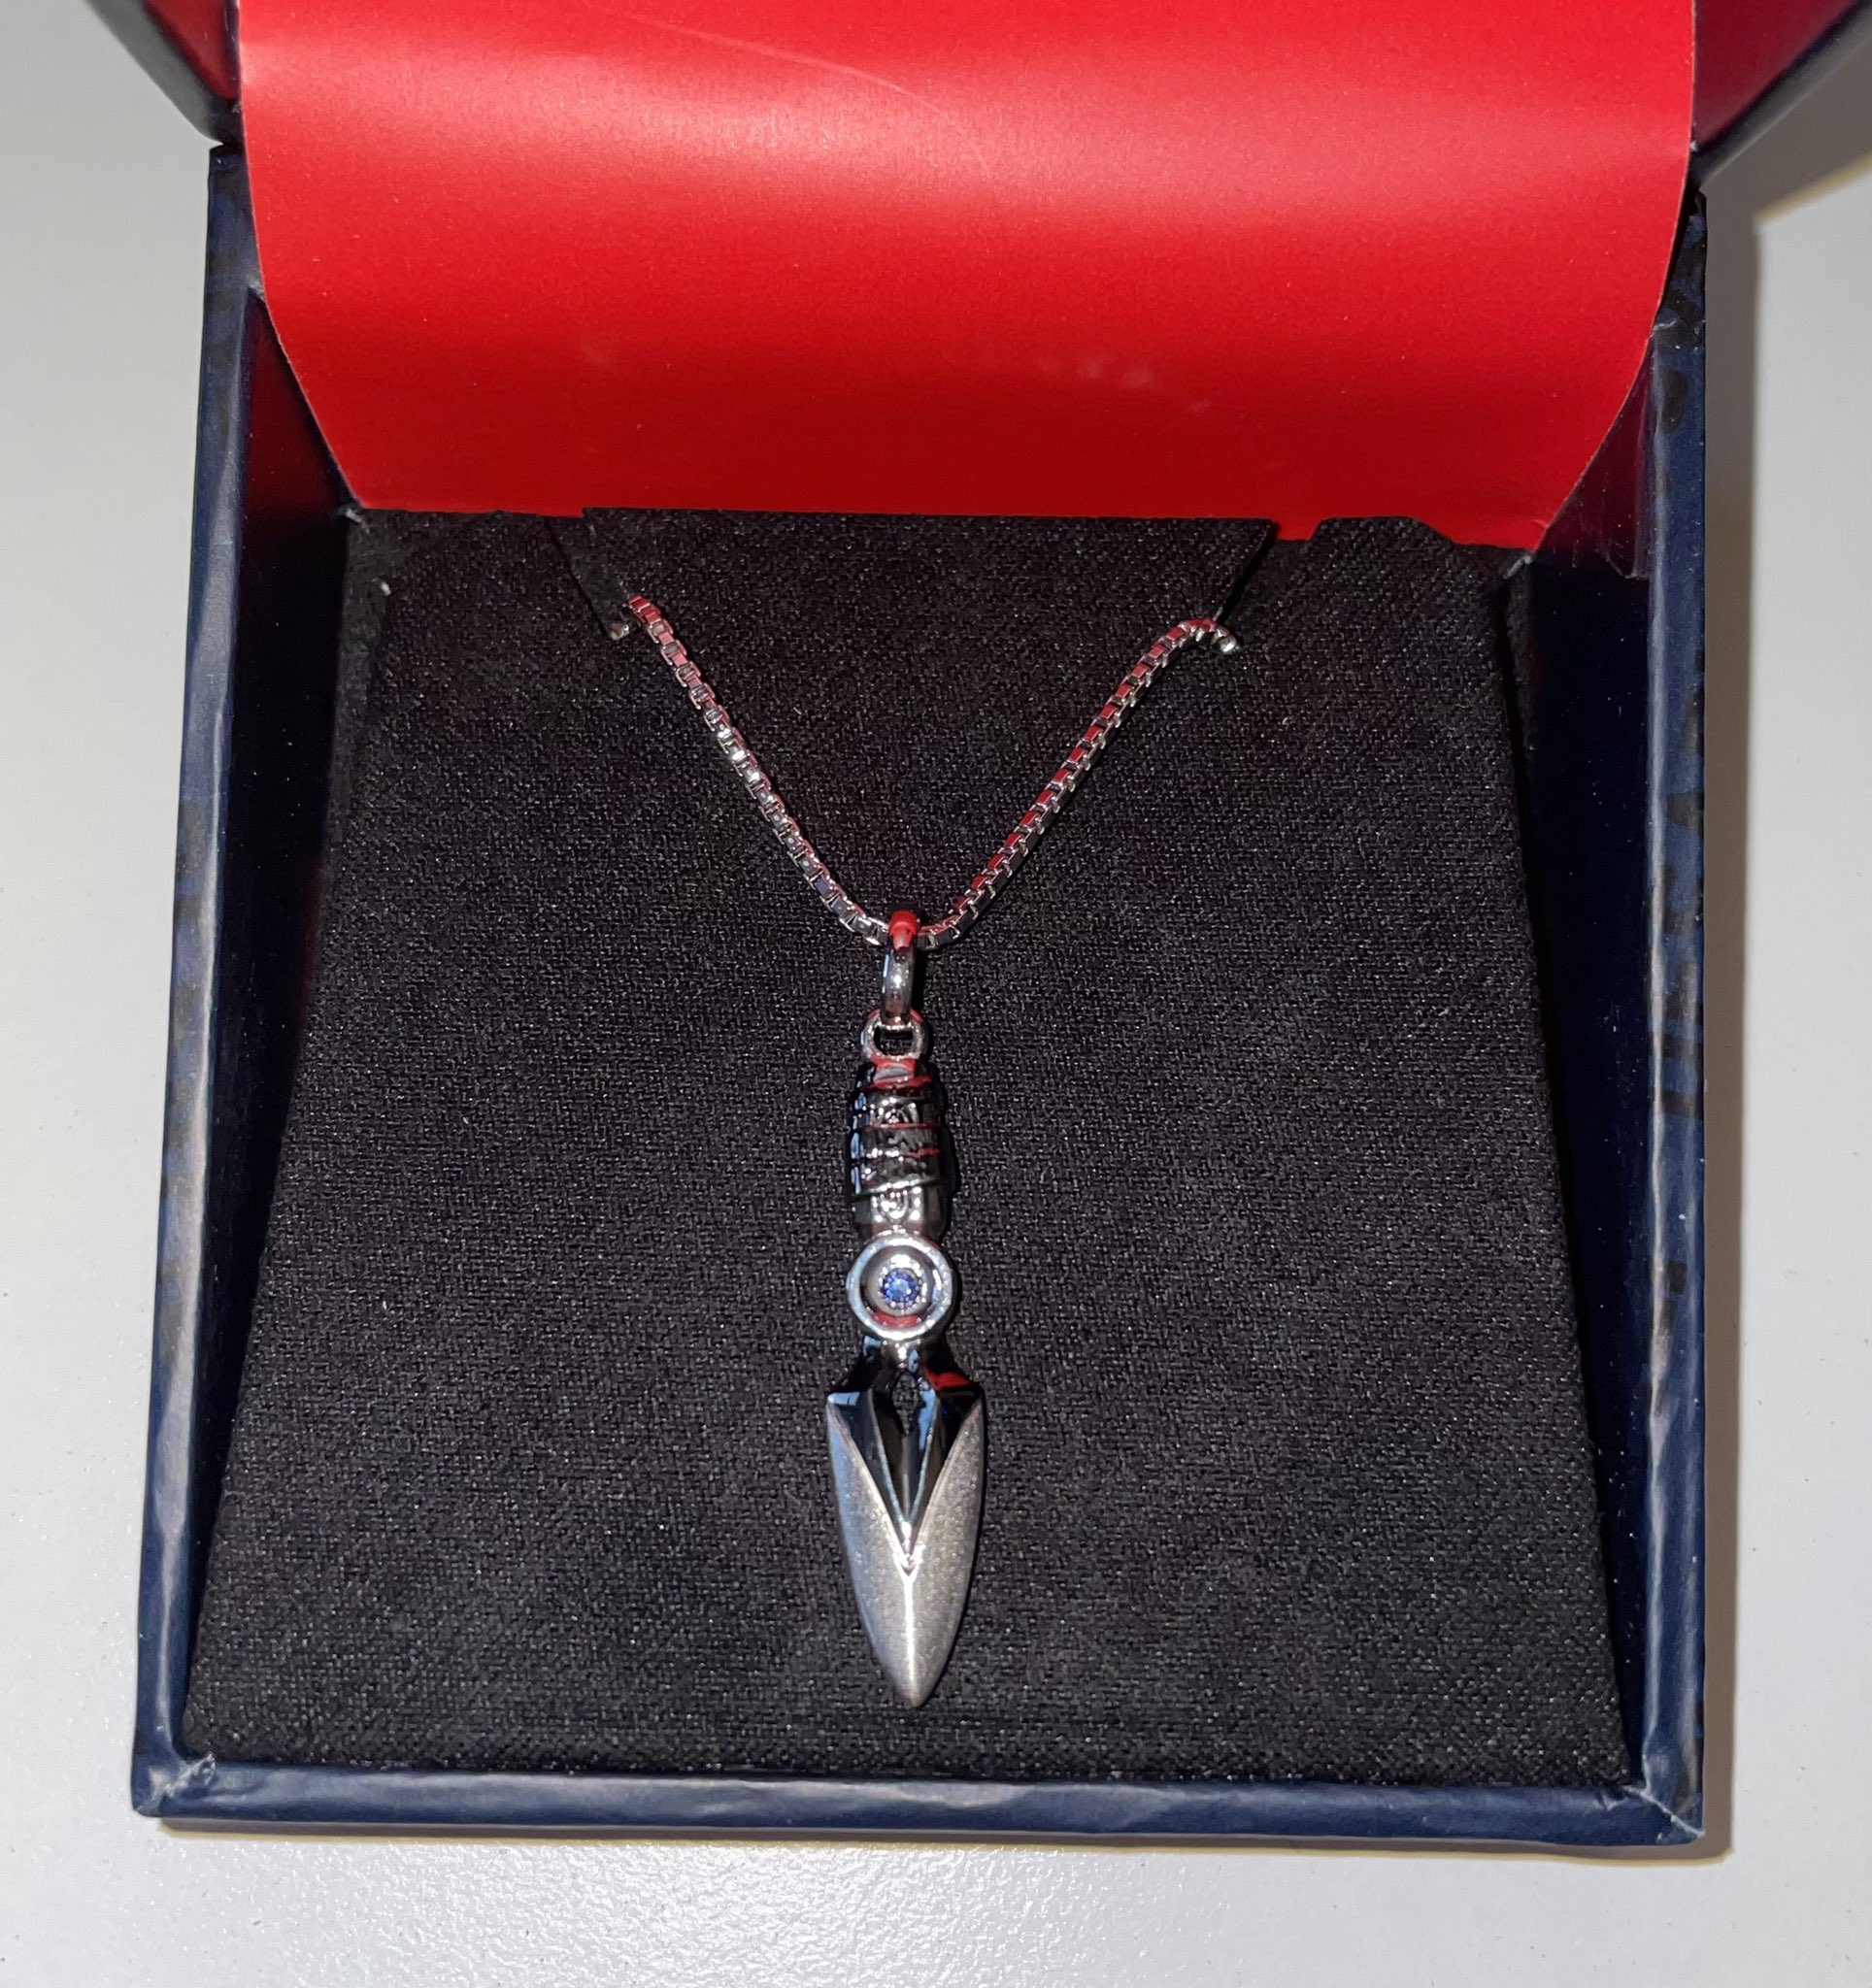 necklace with hidden knife : r/mallninjashit